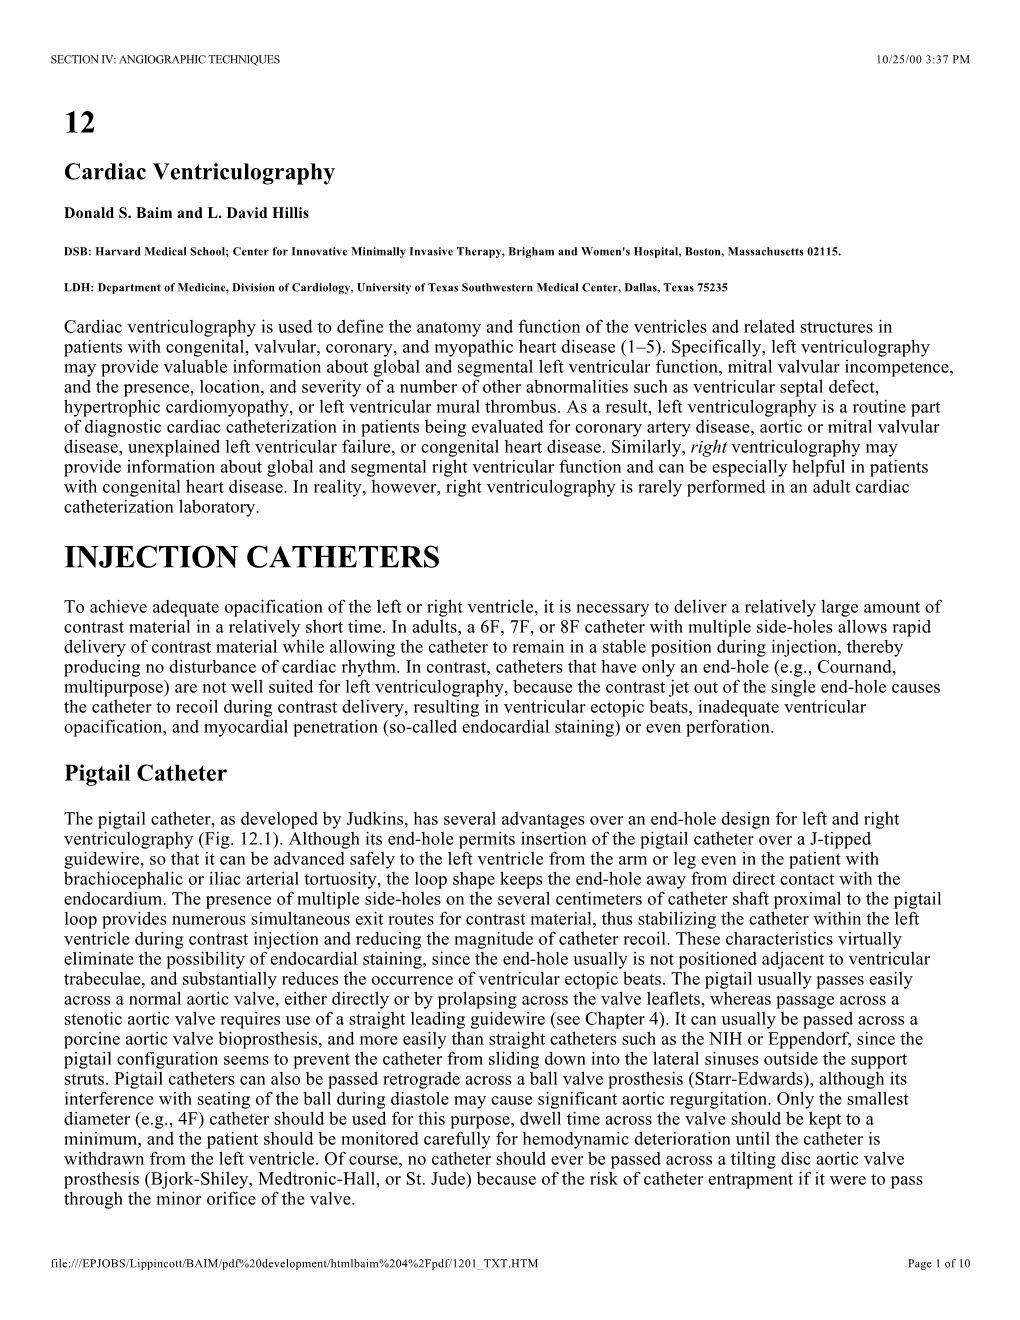 12 Injection Catheters